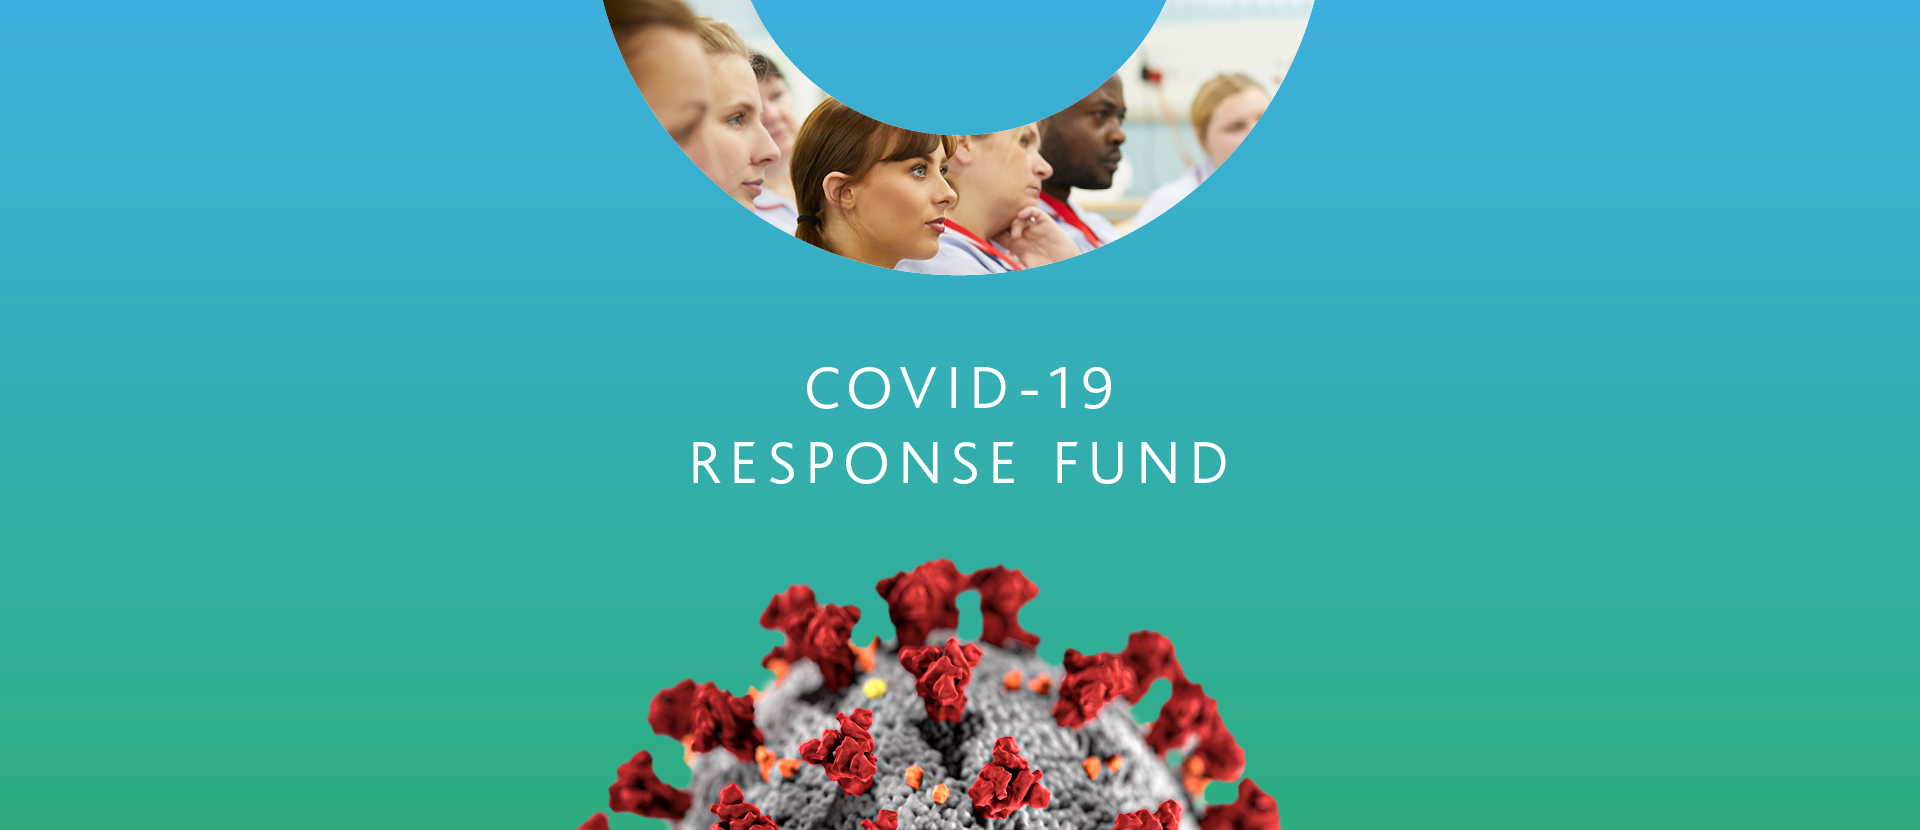 Covid-19 response fund hero banner